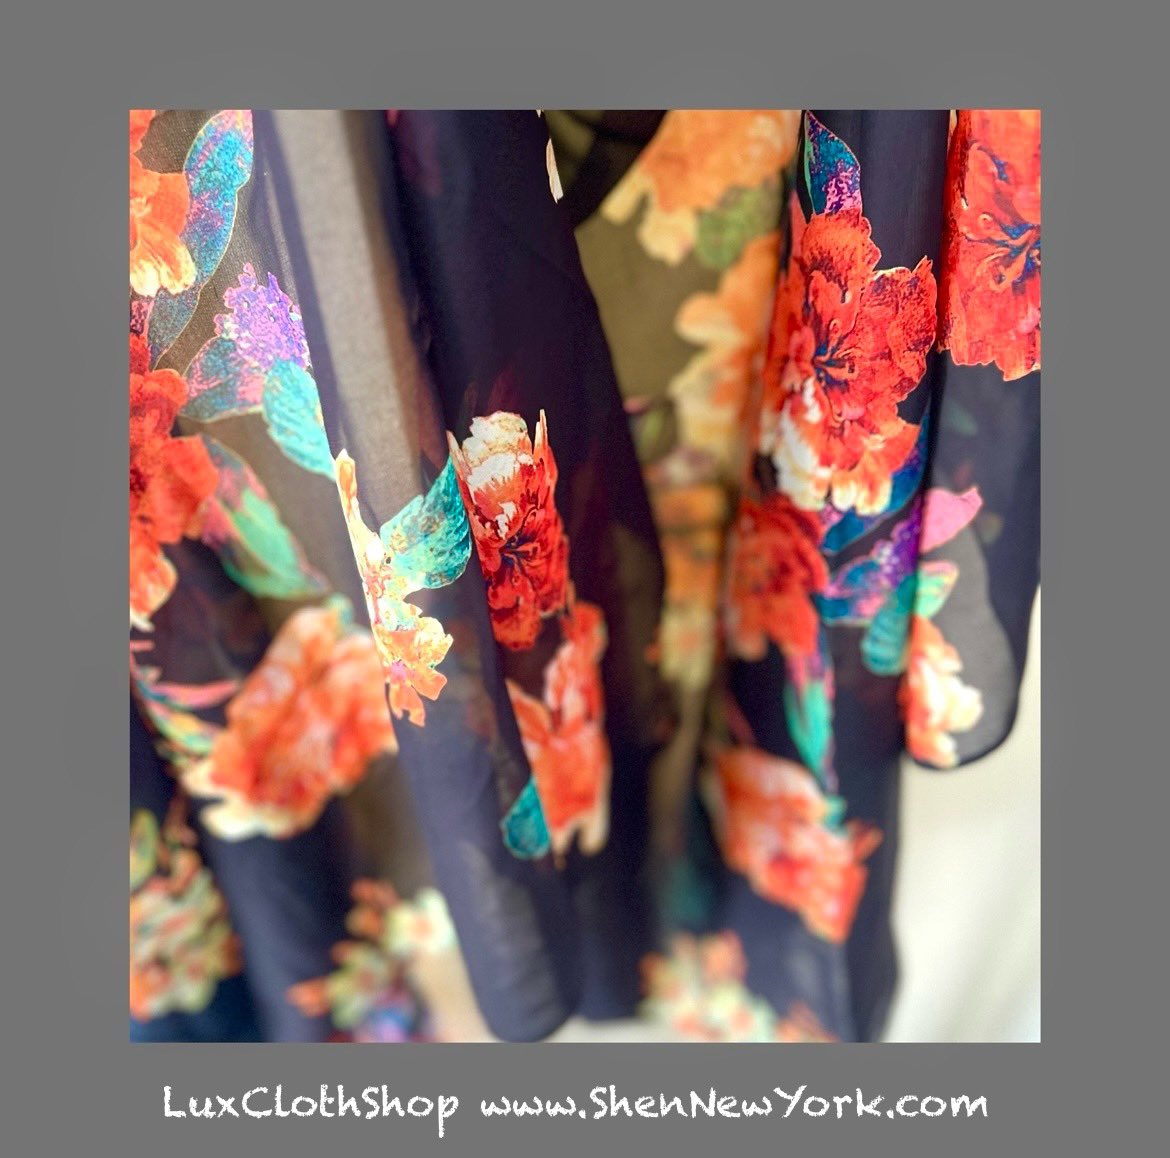 Designer Fabric by the yard at LuxClothShop at ShenNewYork.com #shennewyork #DesignThinking #fabric #creator #moderndesign #NYC #Boston #Florida #handmade #deginerfabric #etsy #sewing #Prints #luxurydesign #fashiondesigner #couture #boston #Brooklyn